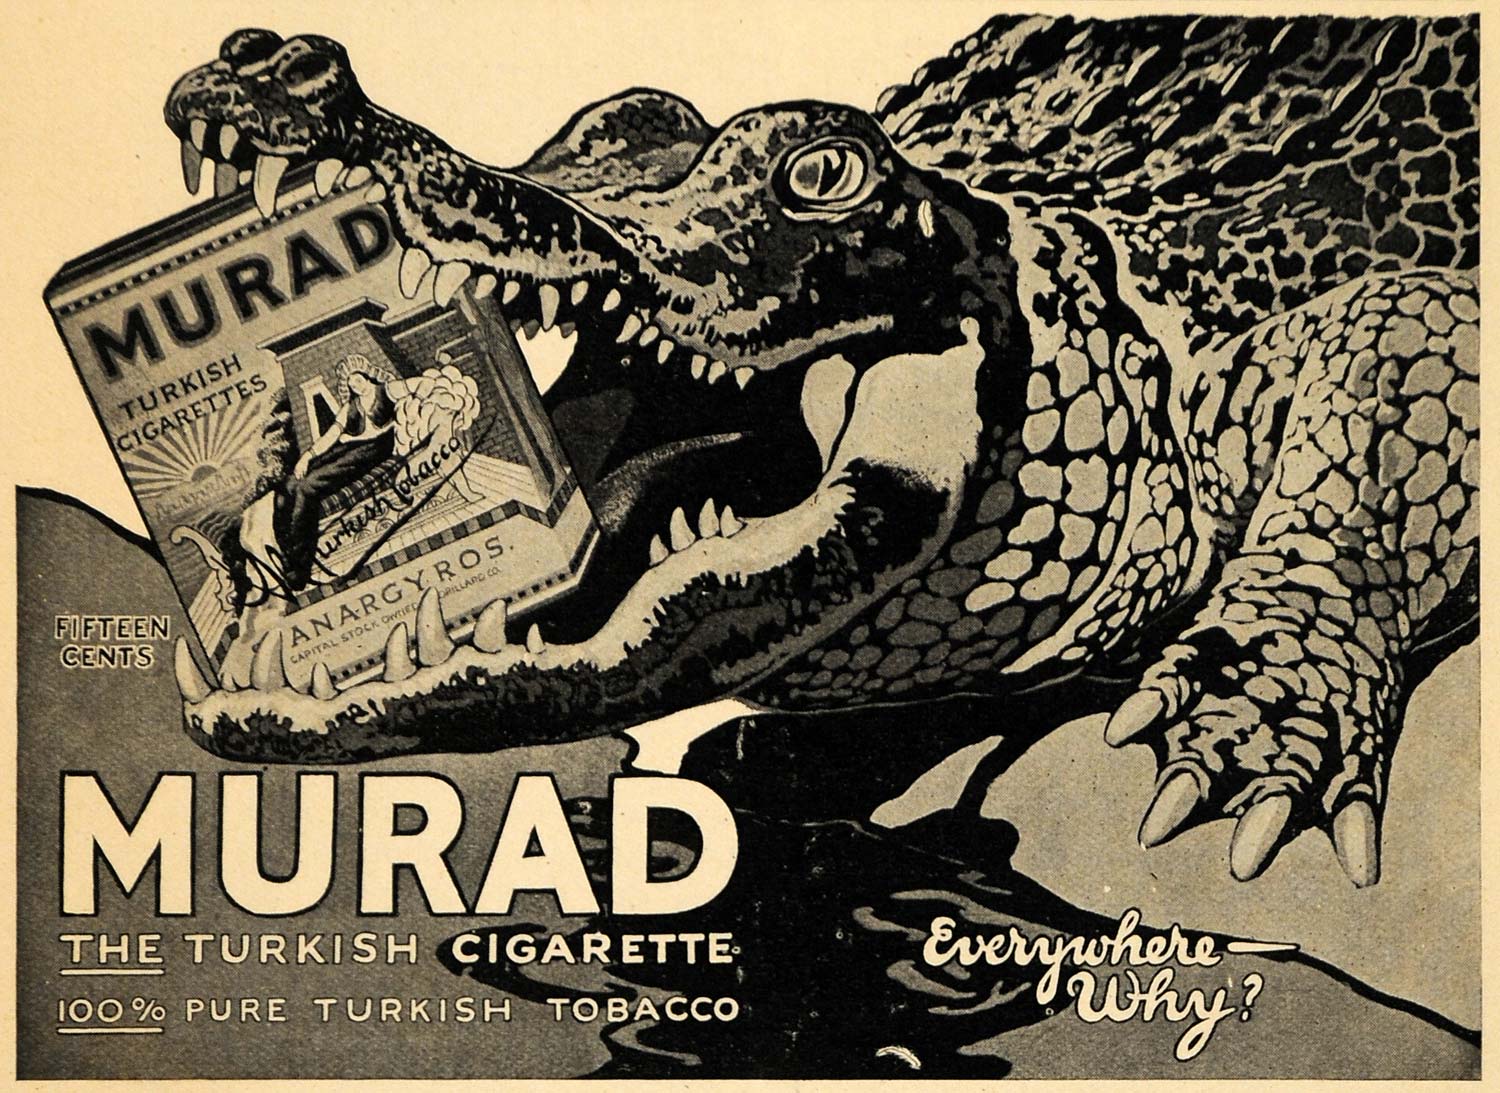 1915 Ad S. Anargyros Murad Turkish Cigarettes Crocodile - ORIGINAL TW1